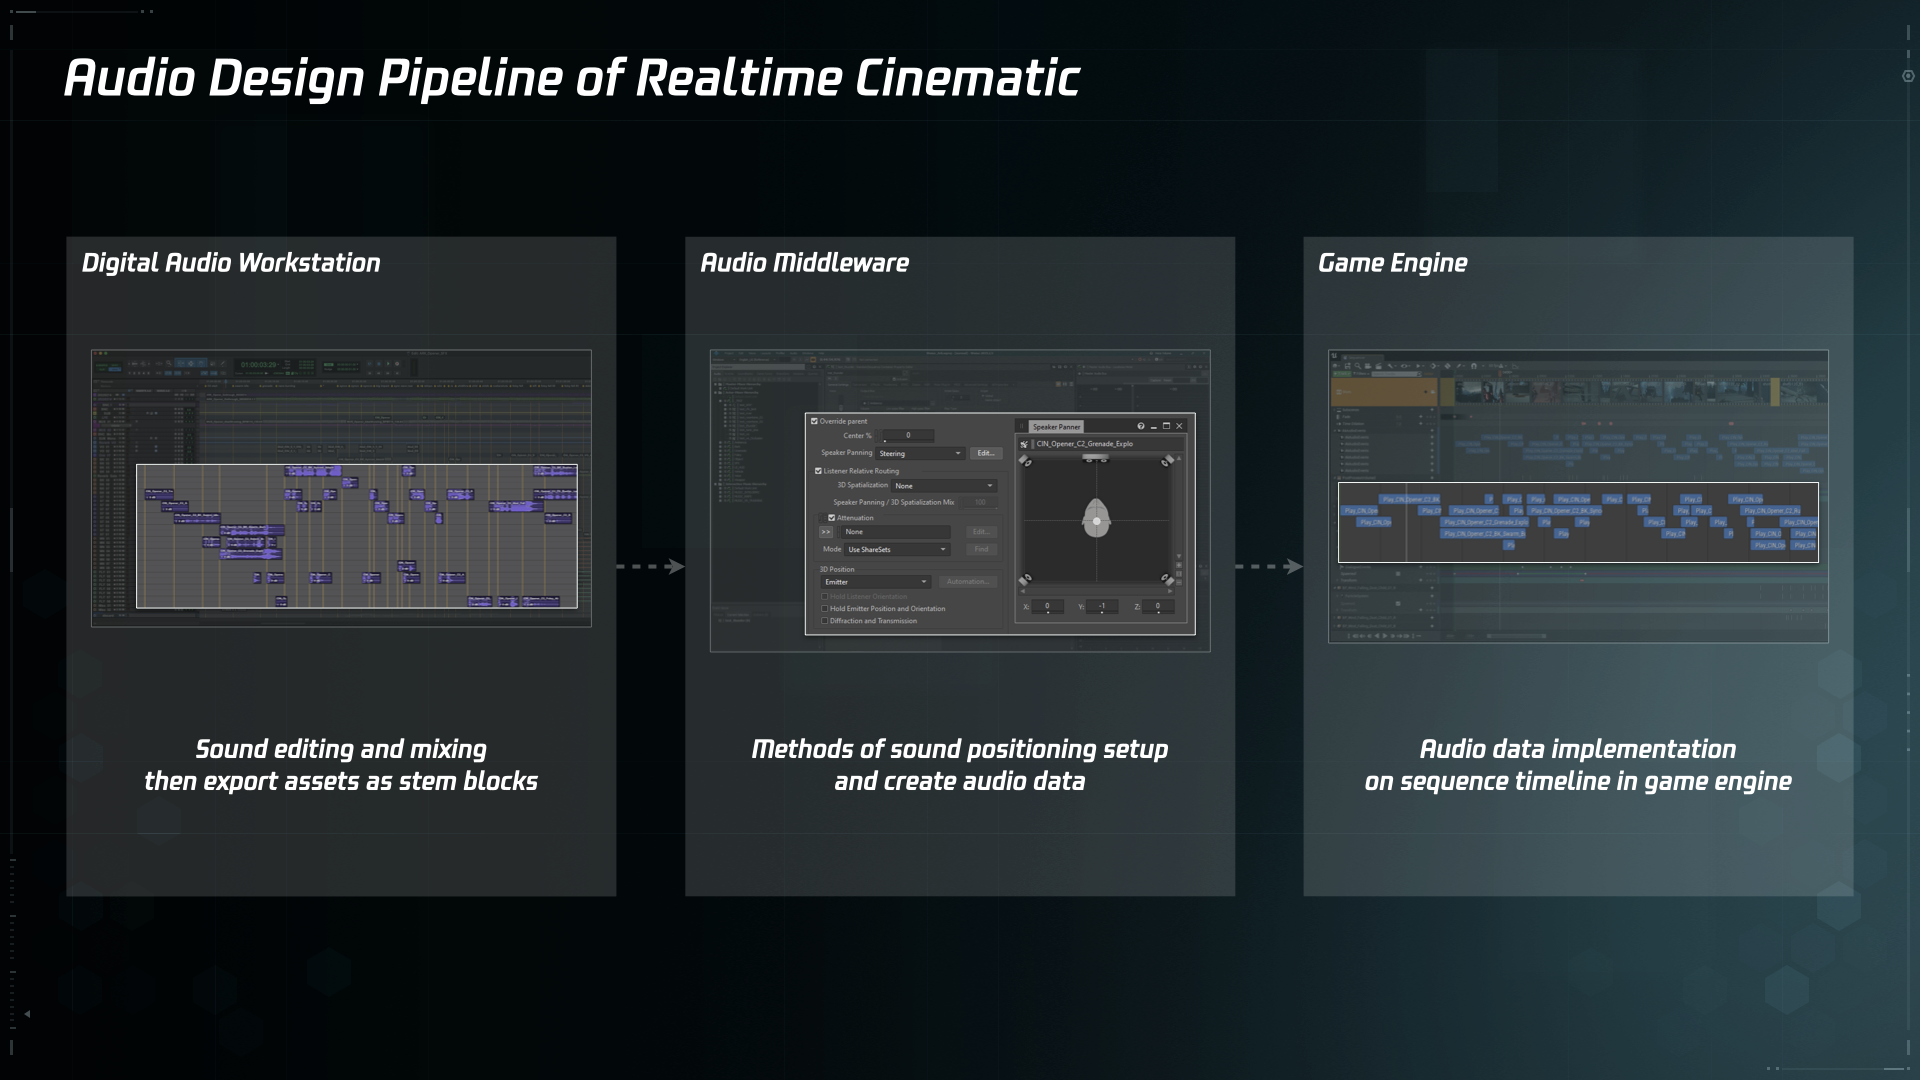 Audio Design Pipeline of Realtime Cinematic